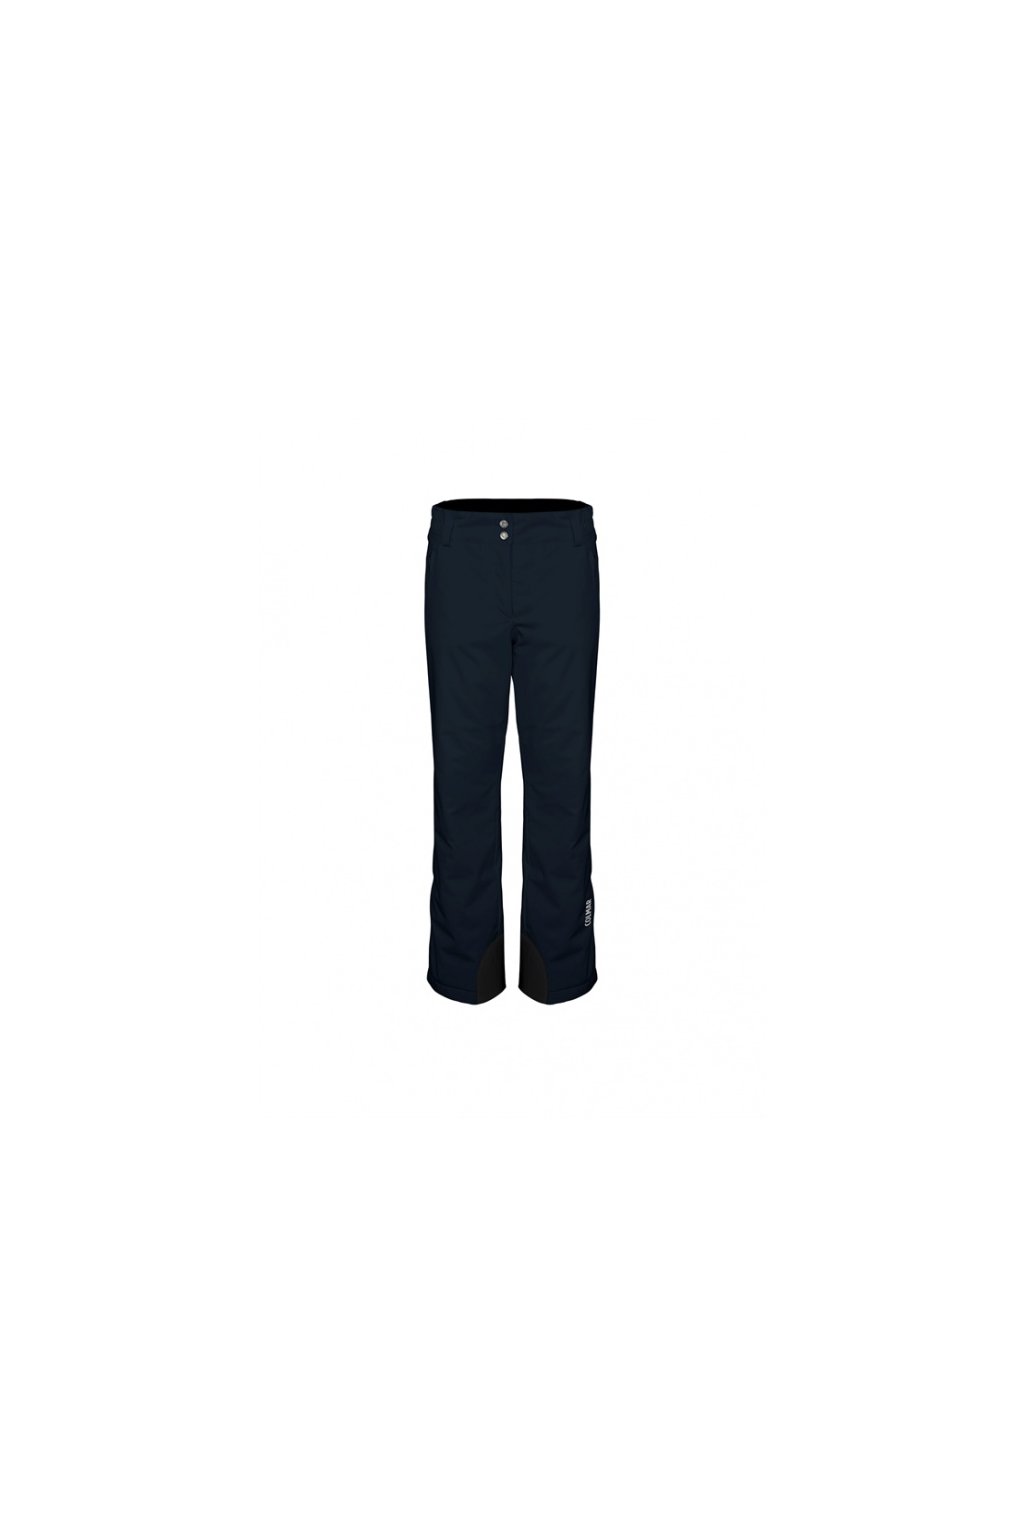 COLMAR - nohavice OT LADIES PANTS blue/black (Velikost 34)